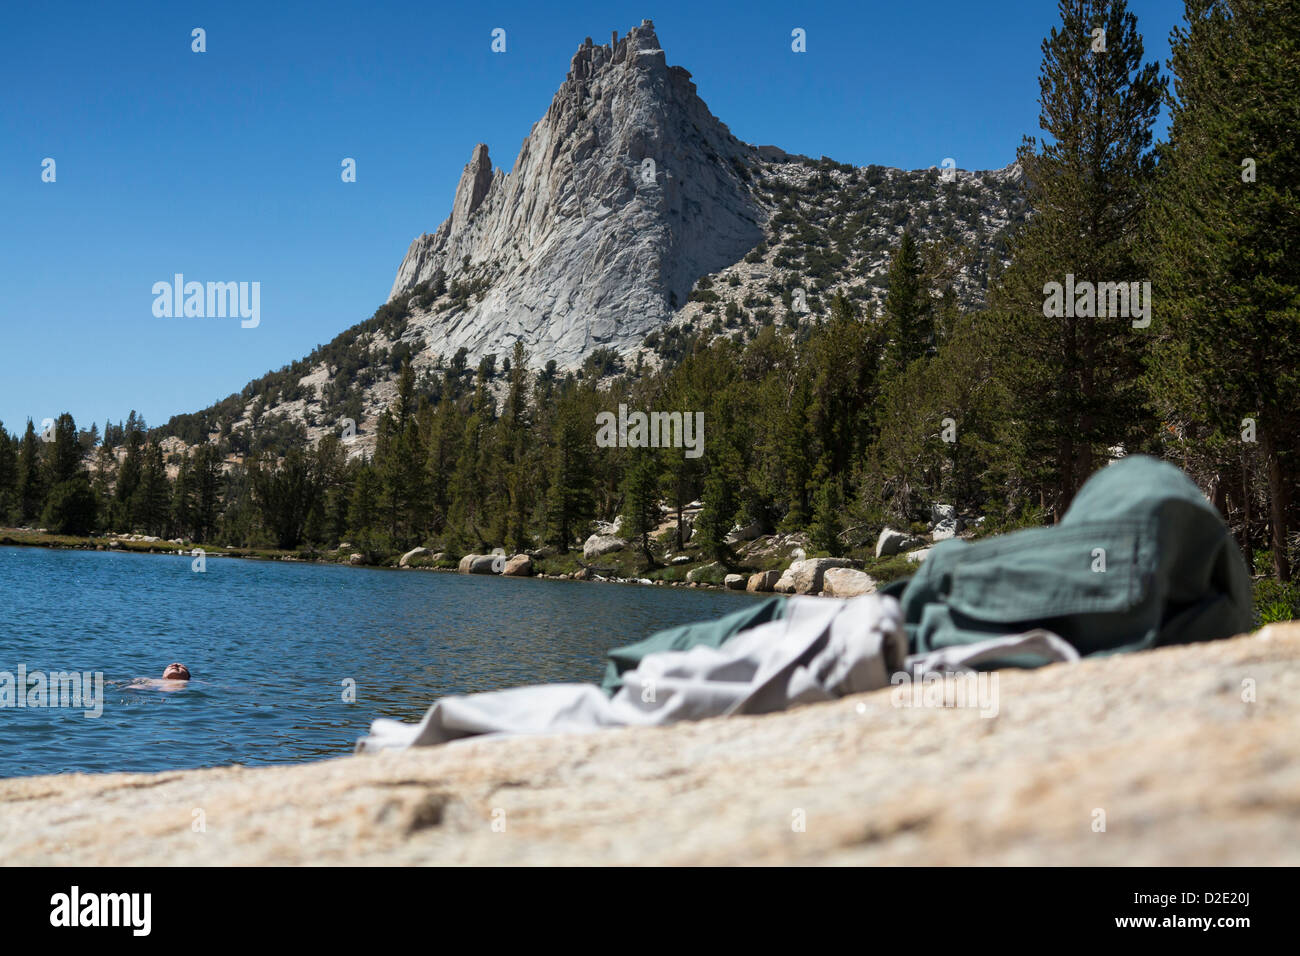 Rock Climbing Lifestyle Sierras California Stock Photo